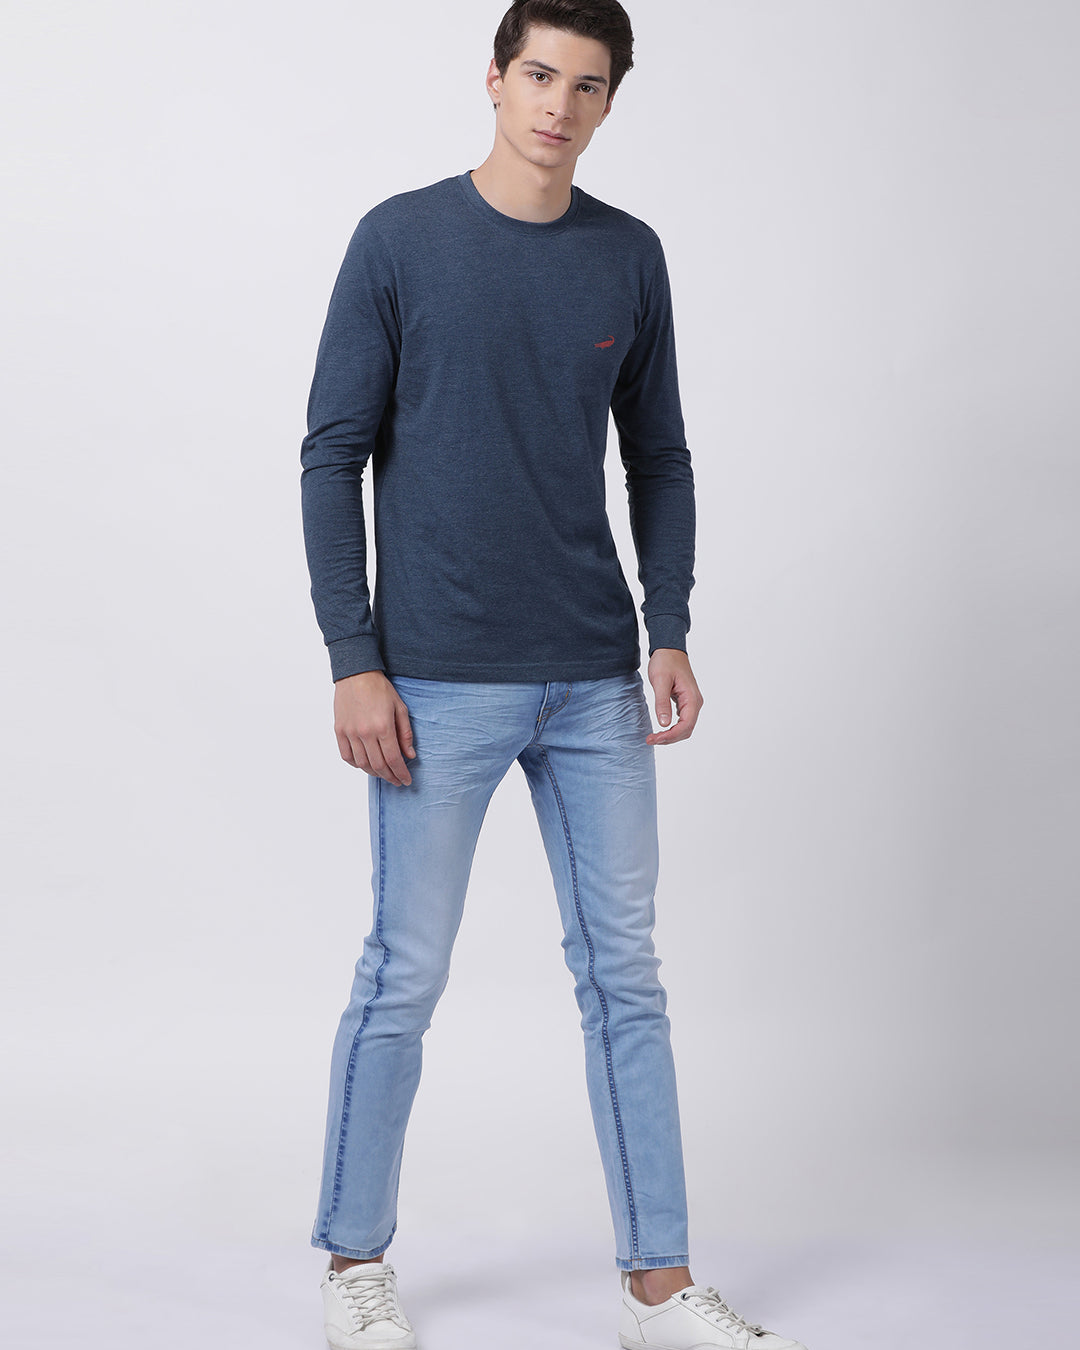 Men's Solid Round Neck Full Sleeve Cotton T-Shirt - DENIM MELANGE